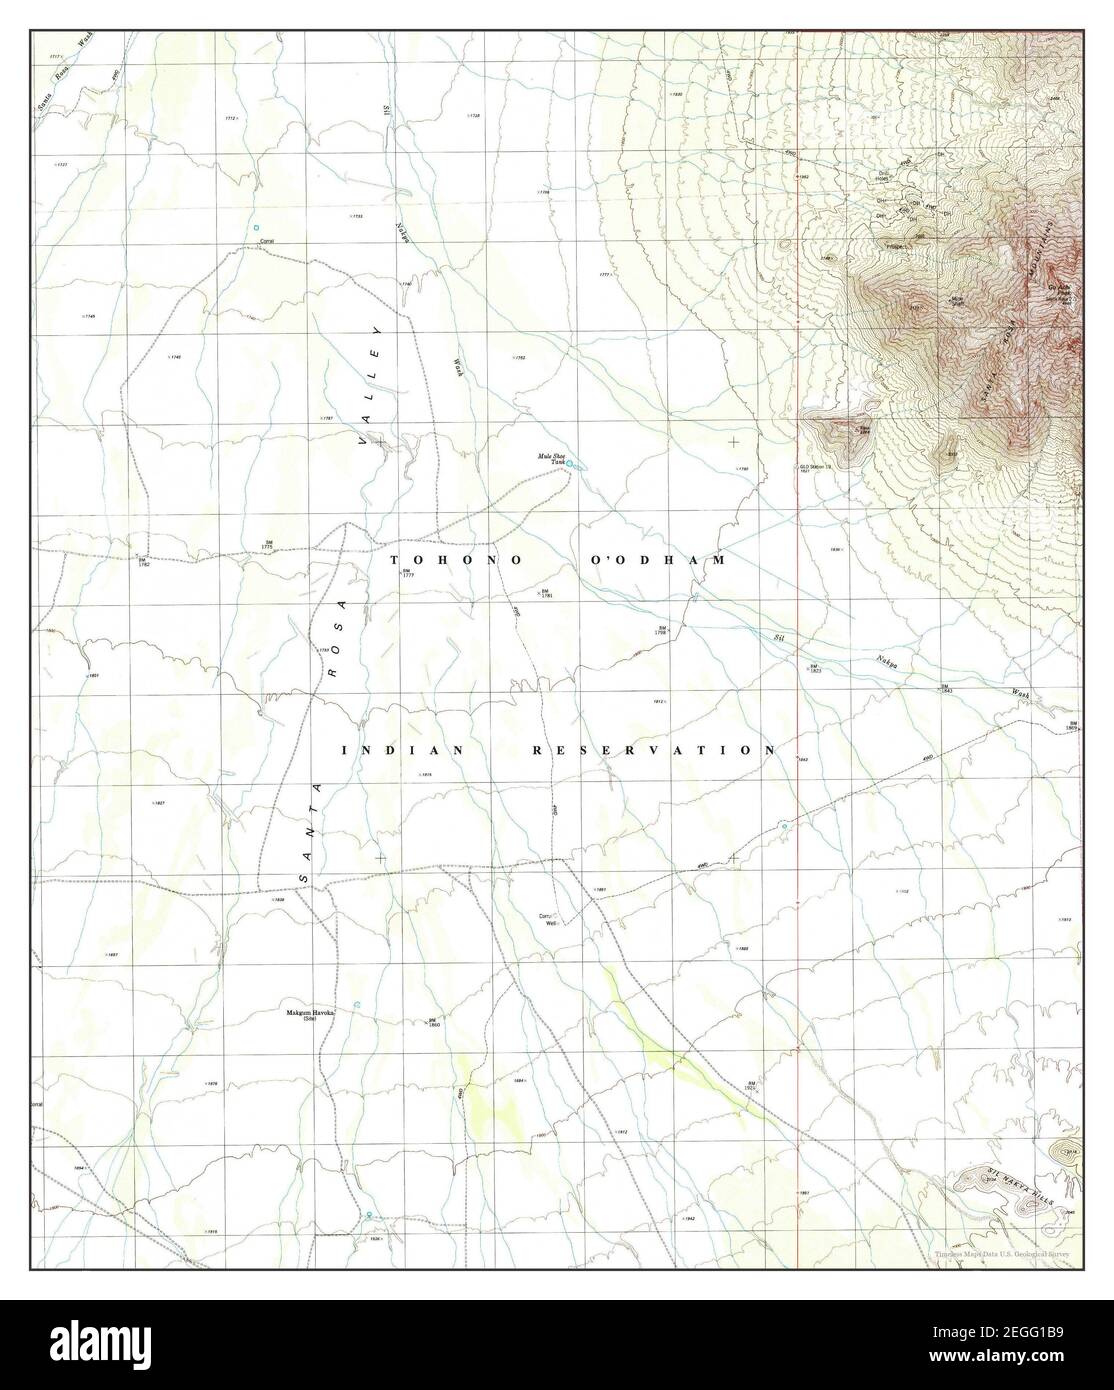 Santa Rosa Mountains SW, Arizona, map 1996, 1:24000, United States of America by Timeless Maps, data U.S. Geological Survey Stock Photo